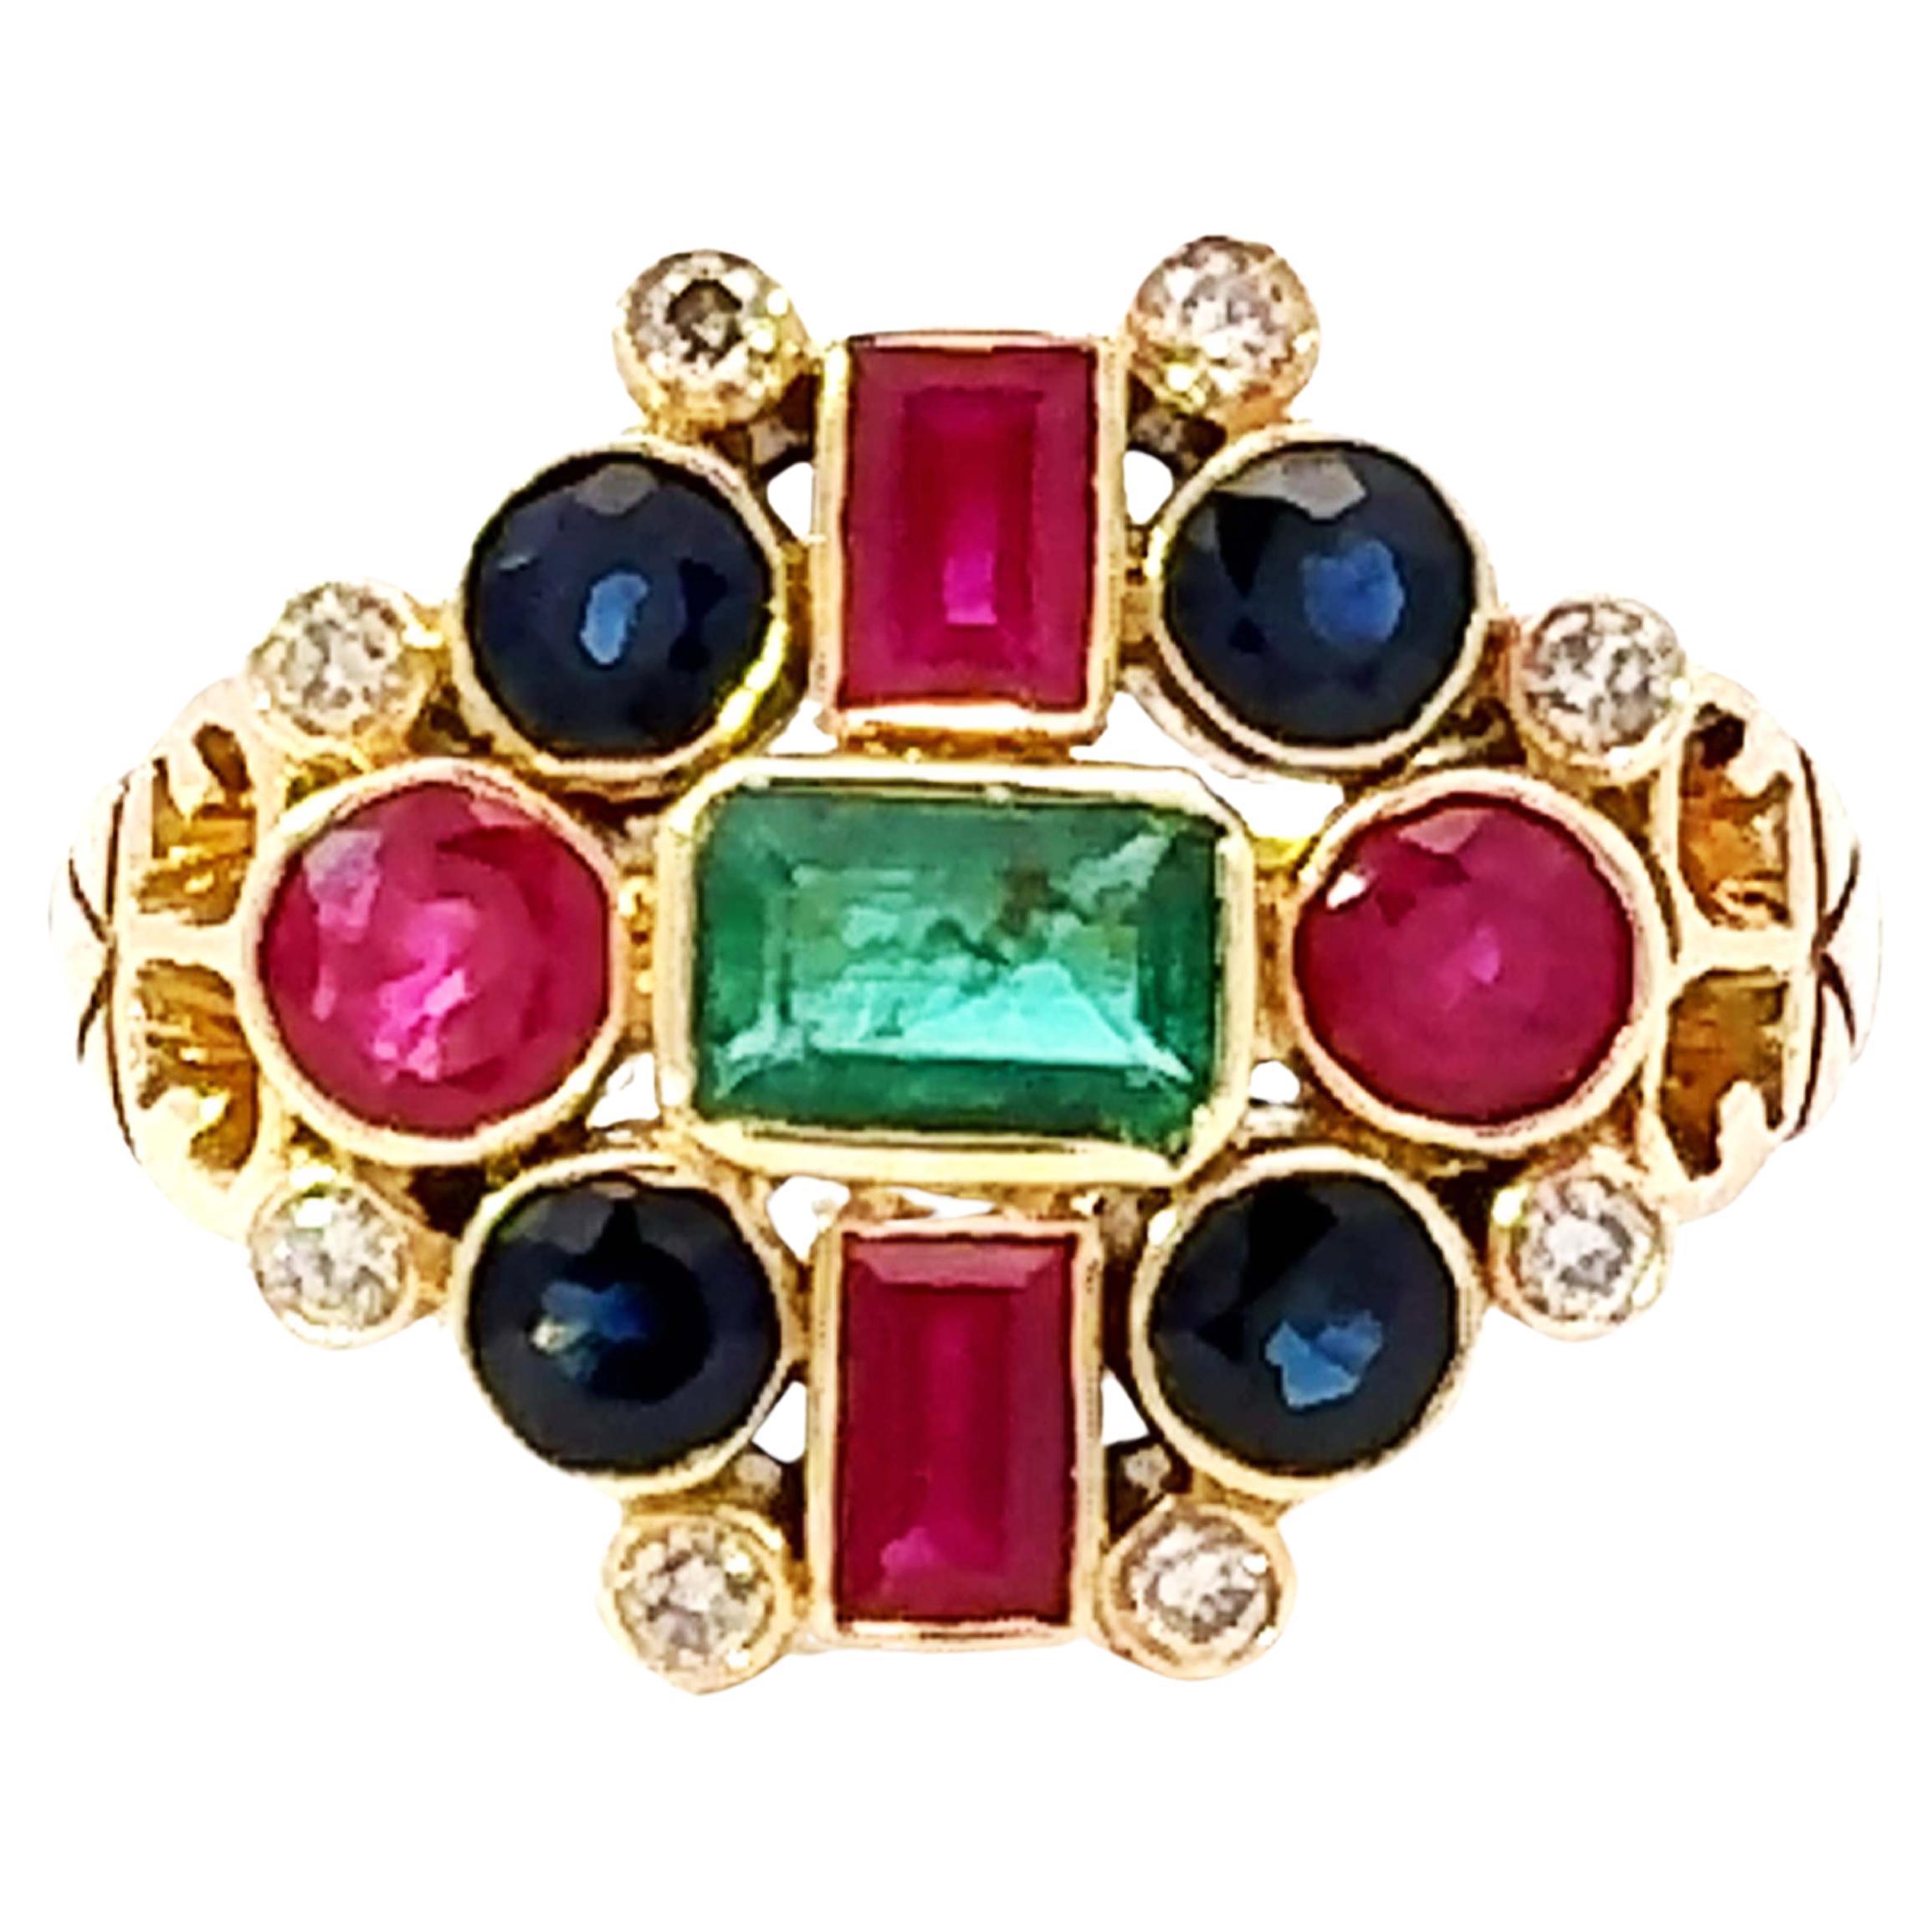 Ruby Emerald Sapphire Diamond Ring 18k Yellow Gold